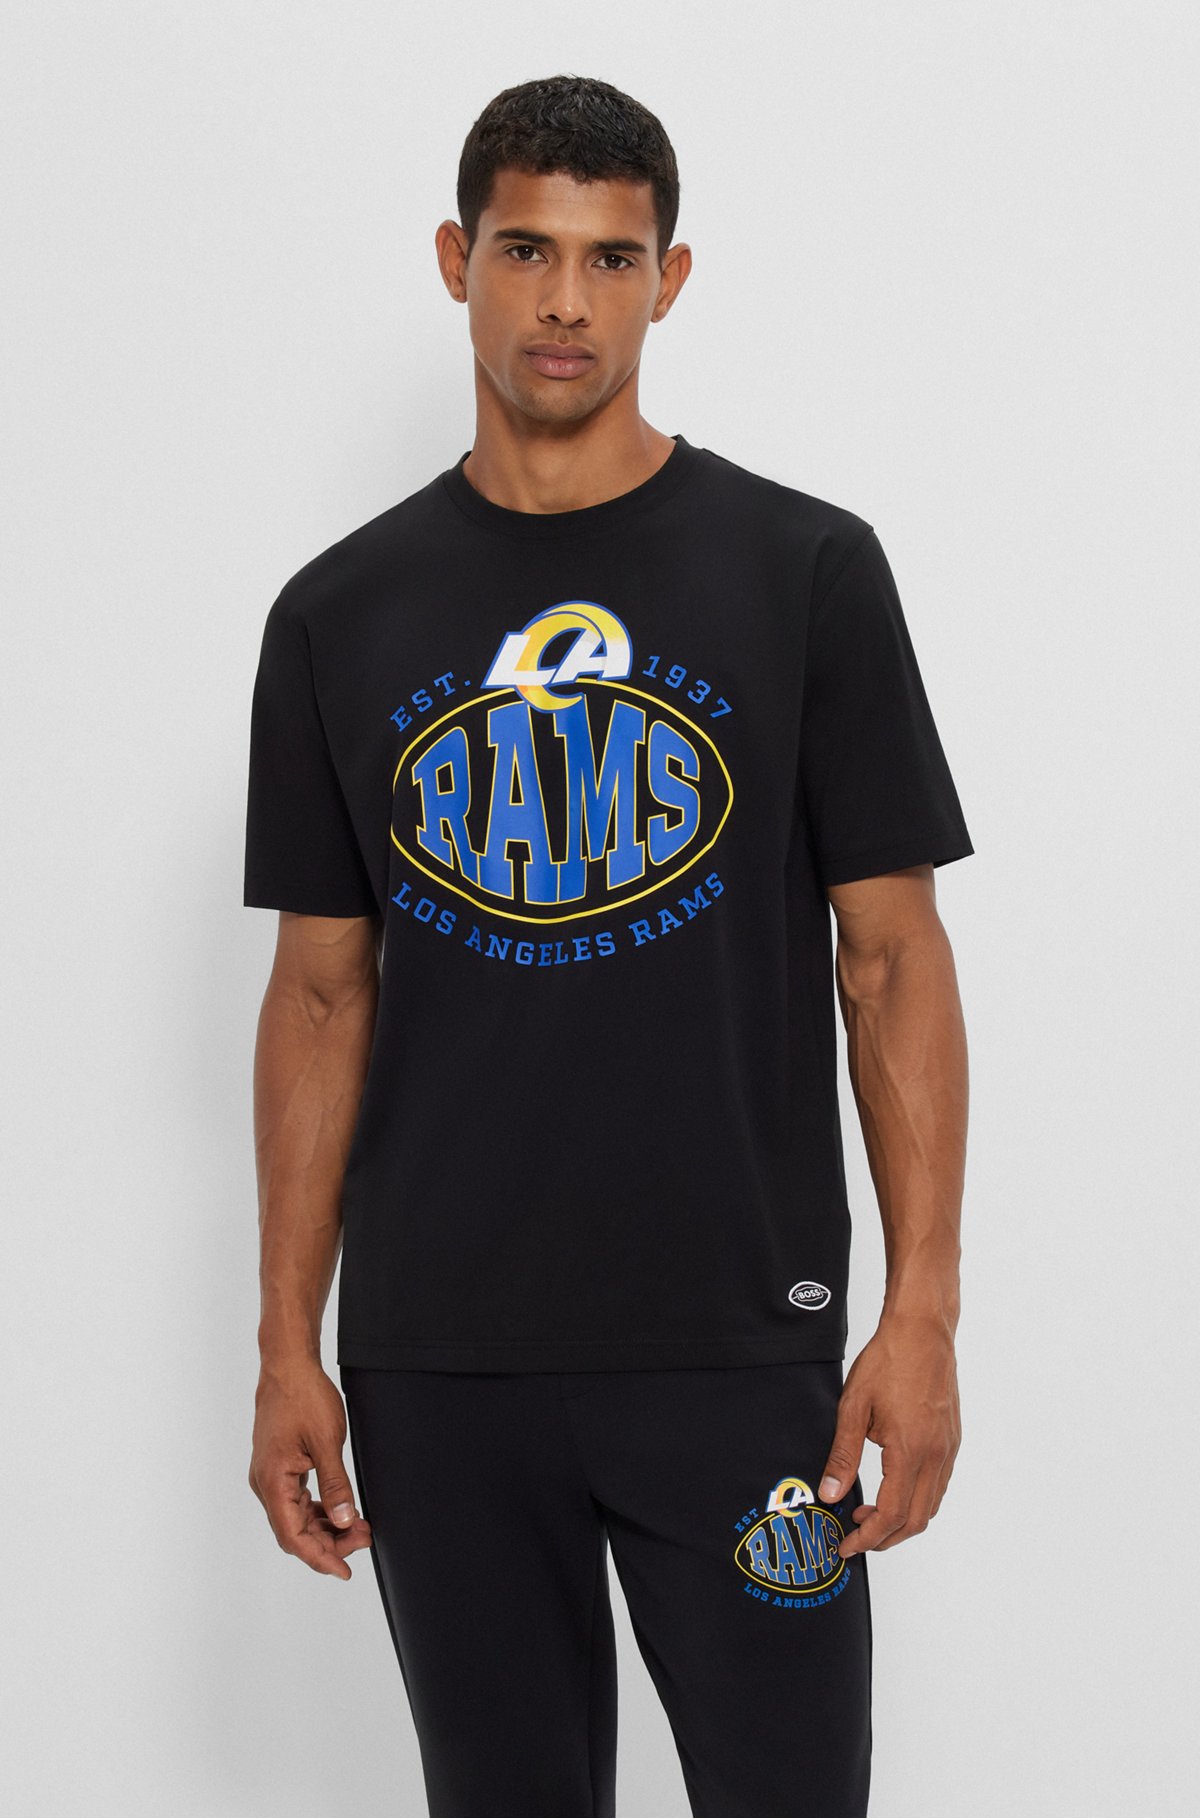  T-shirt en coton stretch BOSS x NFL avec logo du partenariat, Rams